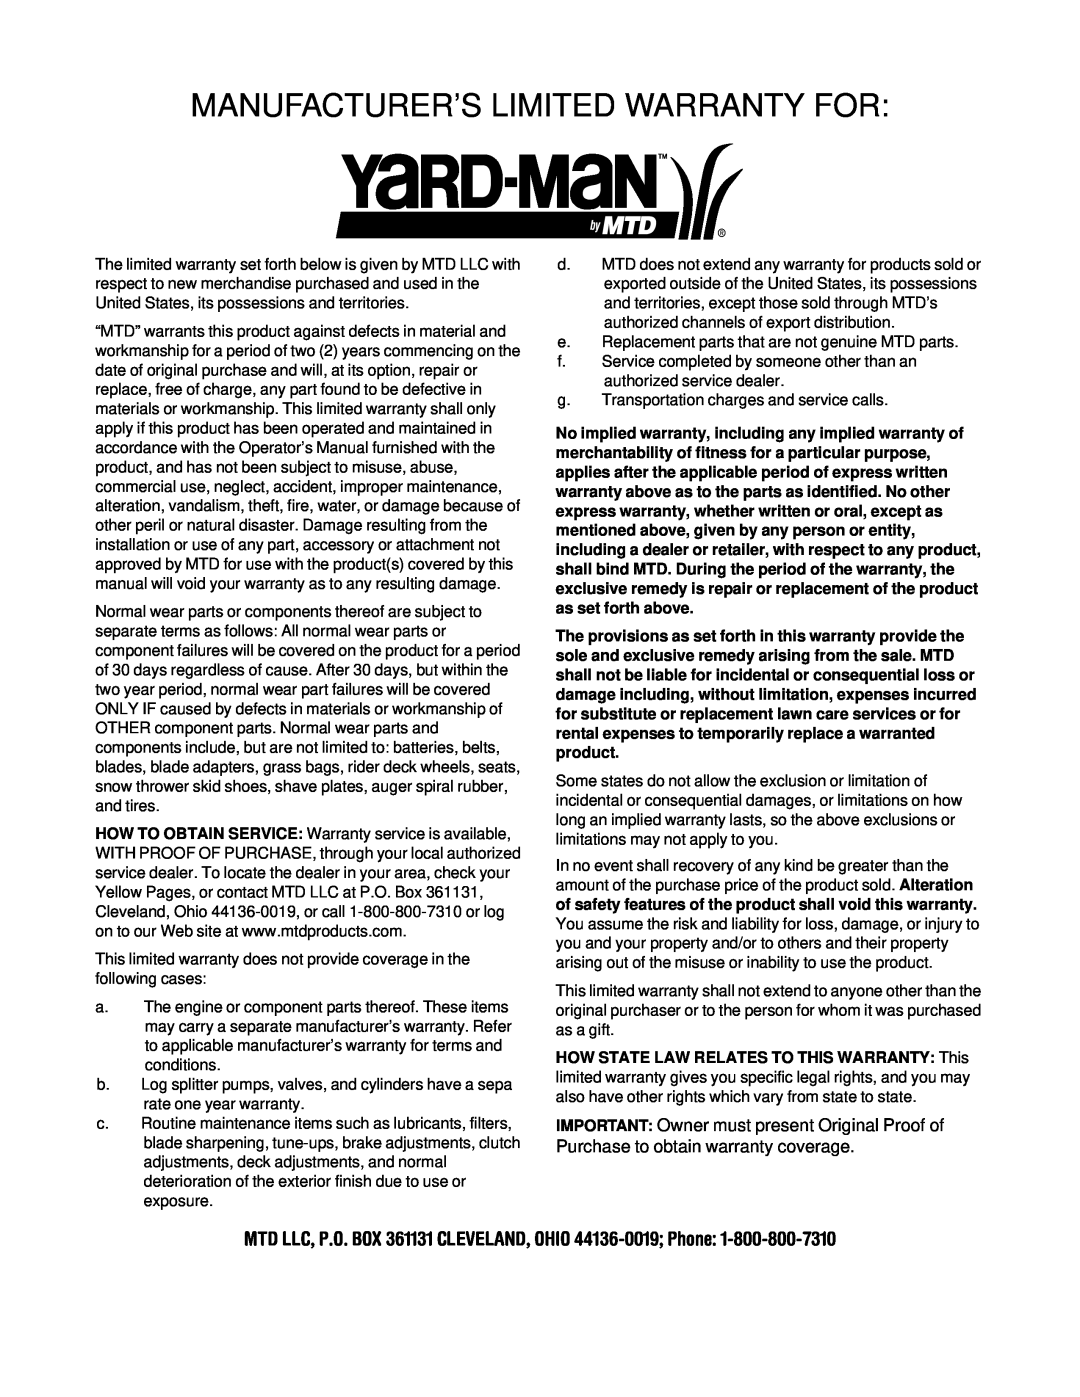 Yard-Man 503 manual MTD LLC, P.O. BOX 361131 CLEVELAND, OHIO 44136-0019 Phone, Manufacturer’S Limited Warranty For 